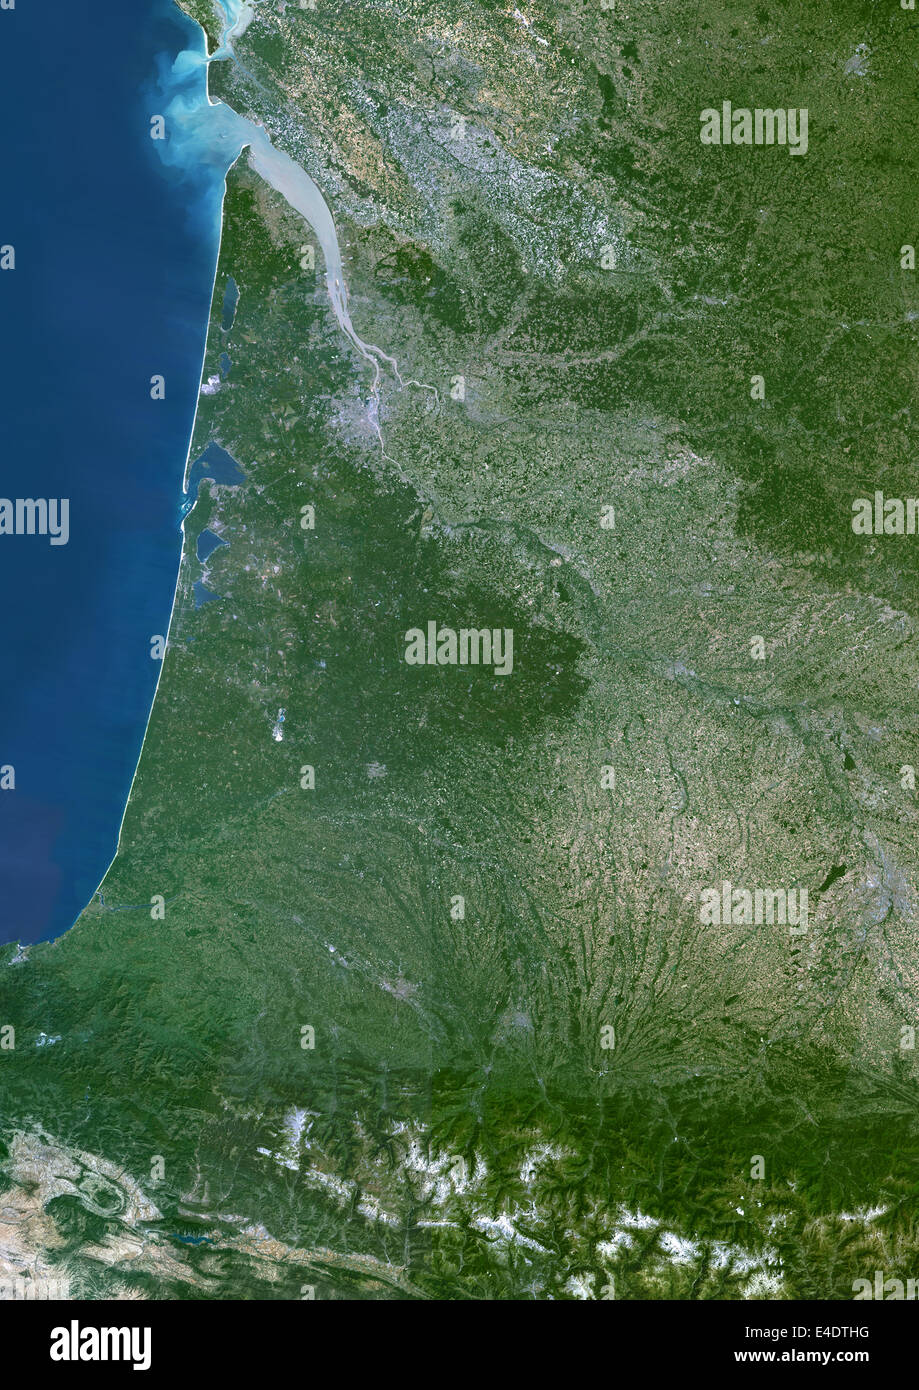 Regione Aquitania, in Francia, True Color satellitare immagine. Regione Aquitania, in Francia, true color satellitare immagine. Questa immagine è stata com Foto Stock